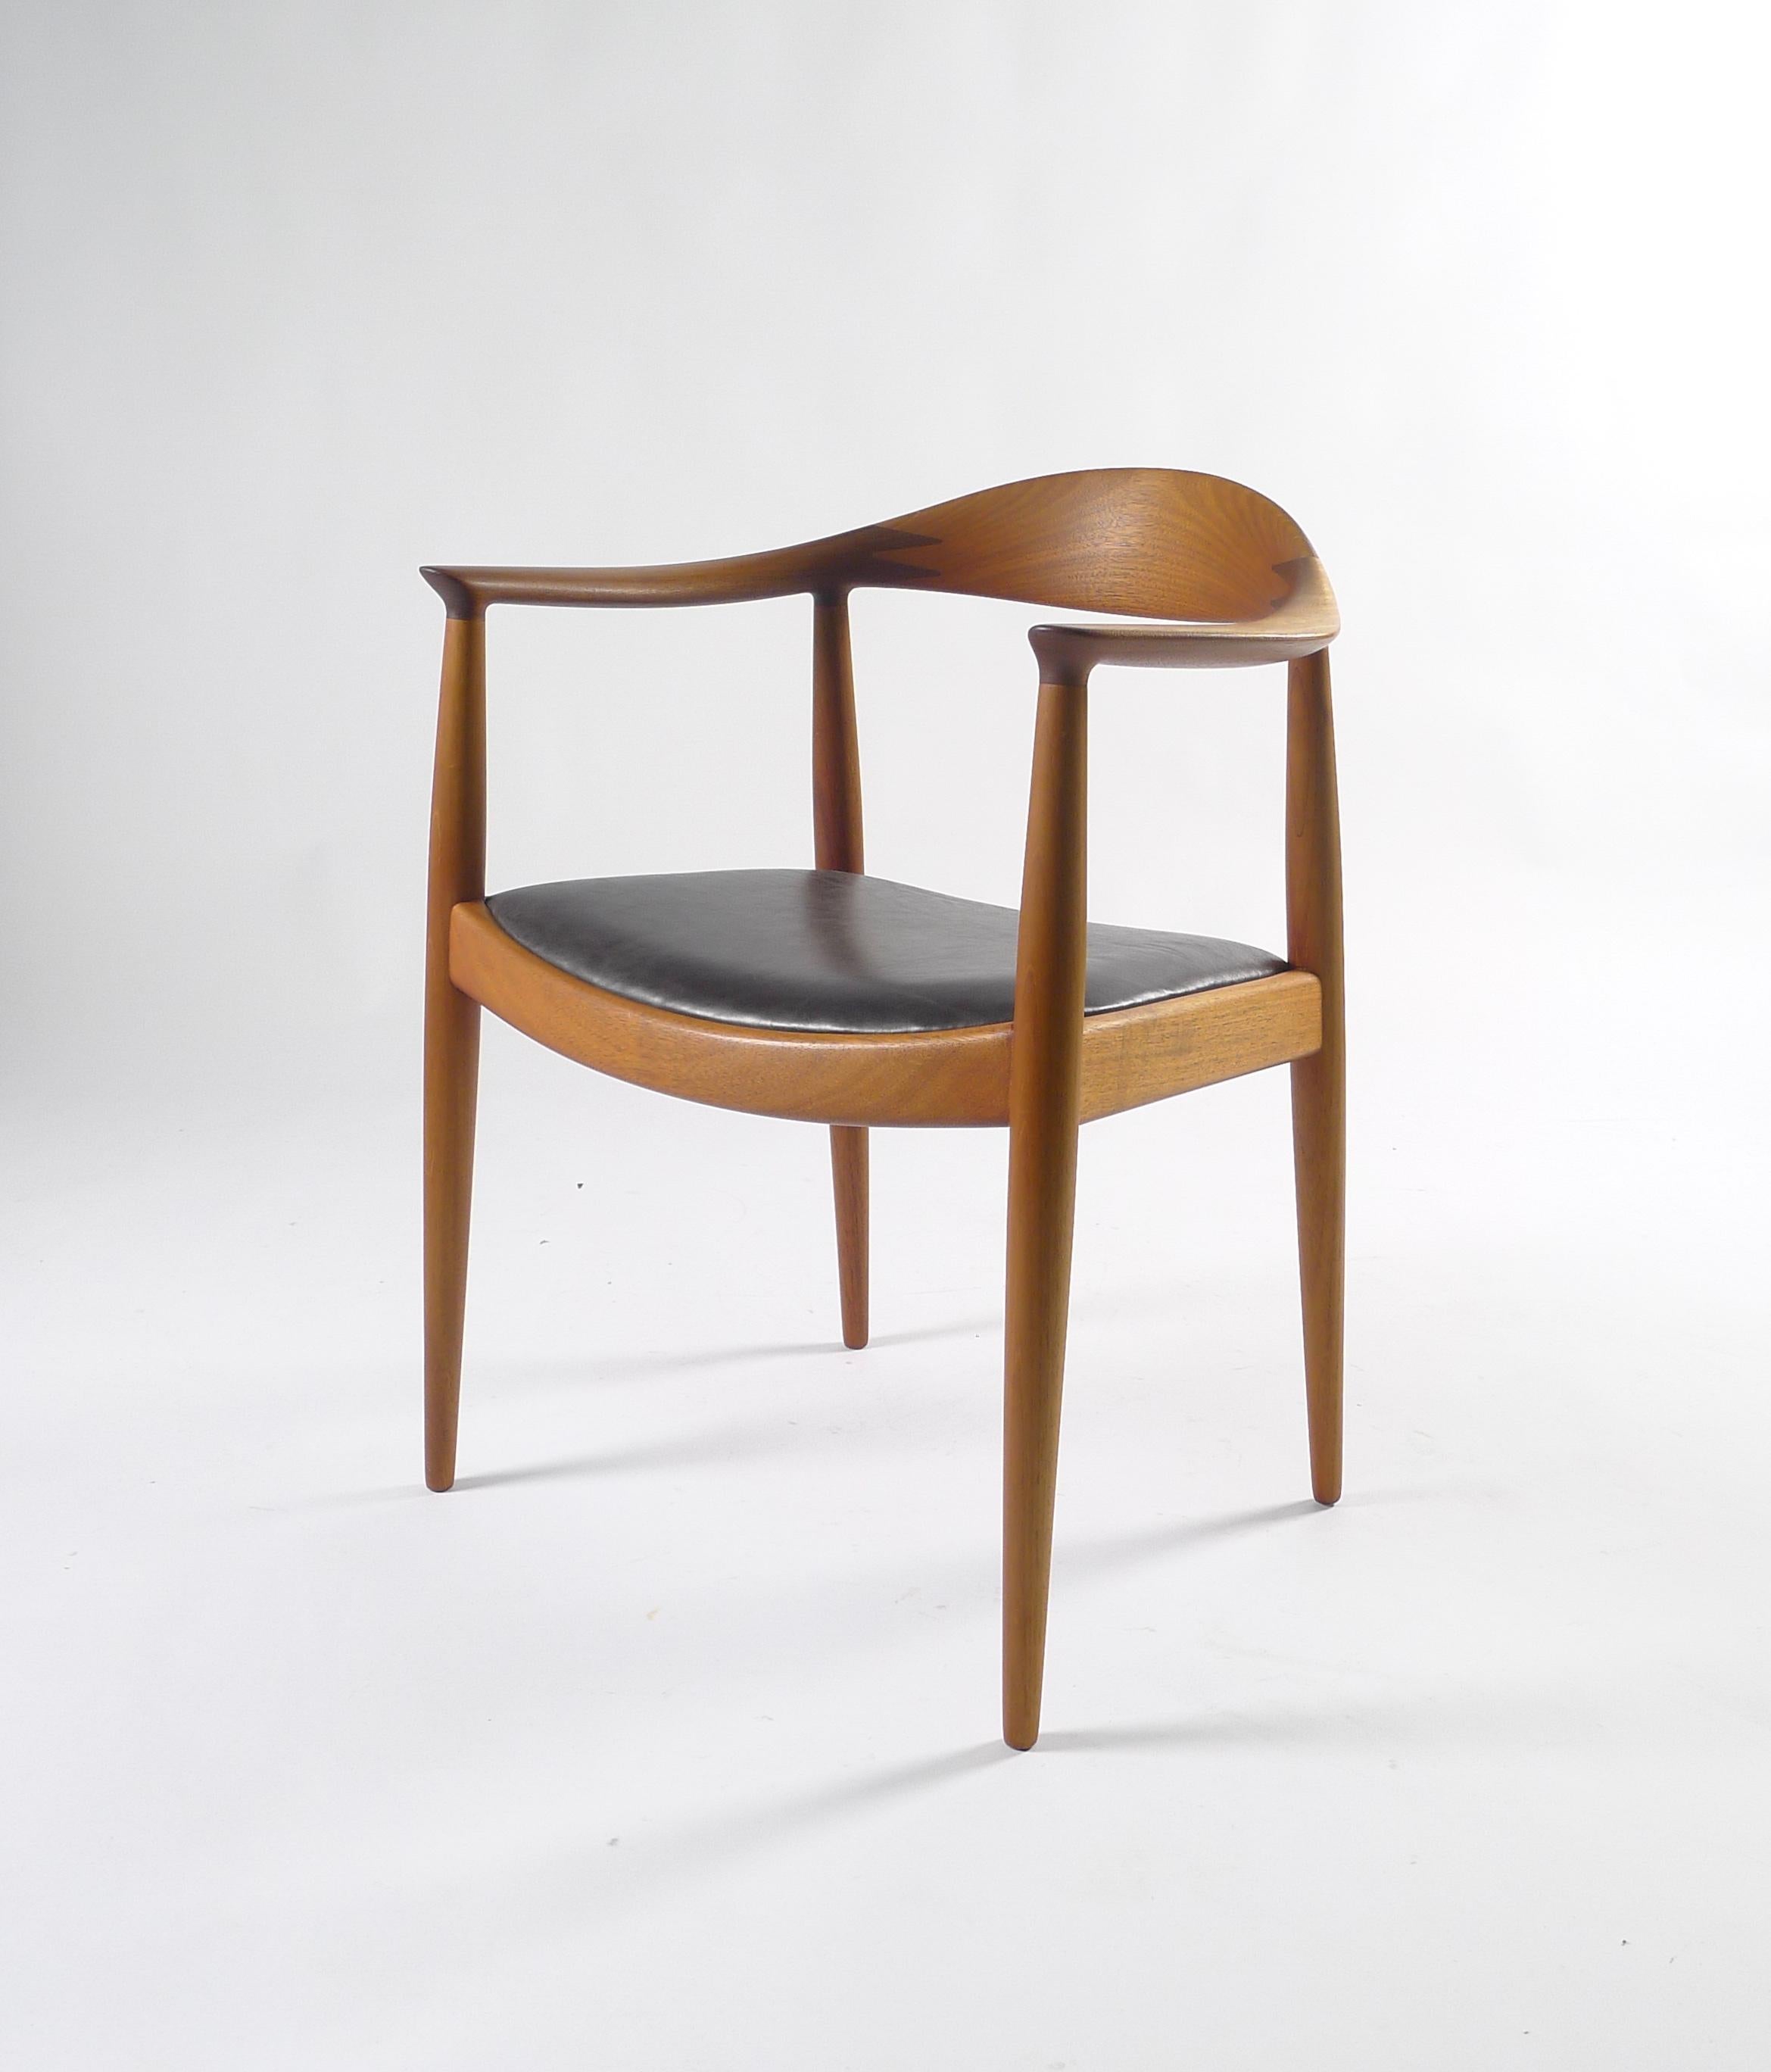 Hans J Wegner, the chair or round chair, model JH503, designed 1949, manufactured by Johannes Hansen, Denmark

Teak frame with curved back, upholstered black leather seat

Stamped mark JOHANNES HANSEN/COPENHAGEN/DENMARK

Known as “The Chair”